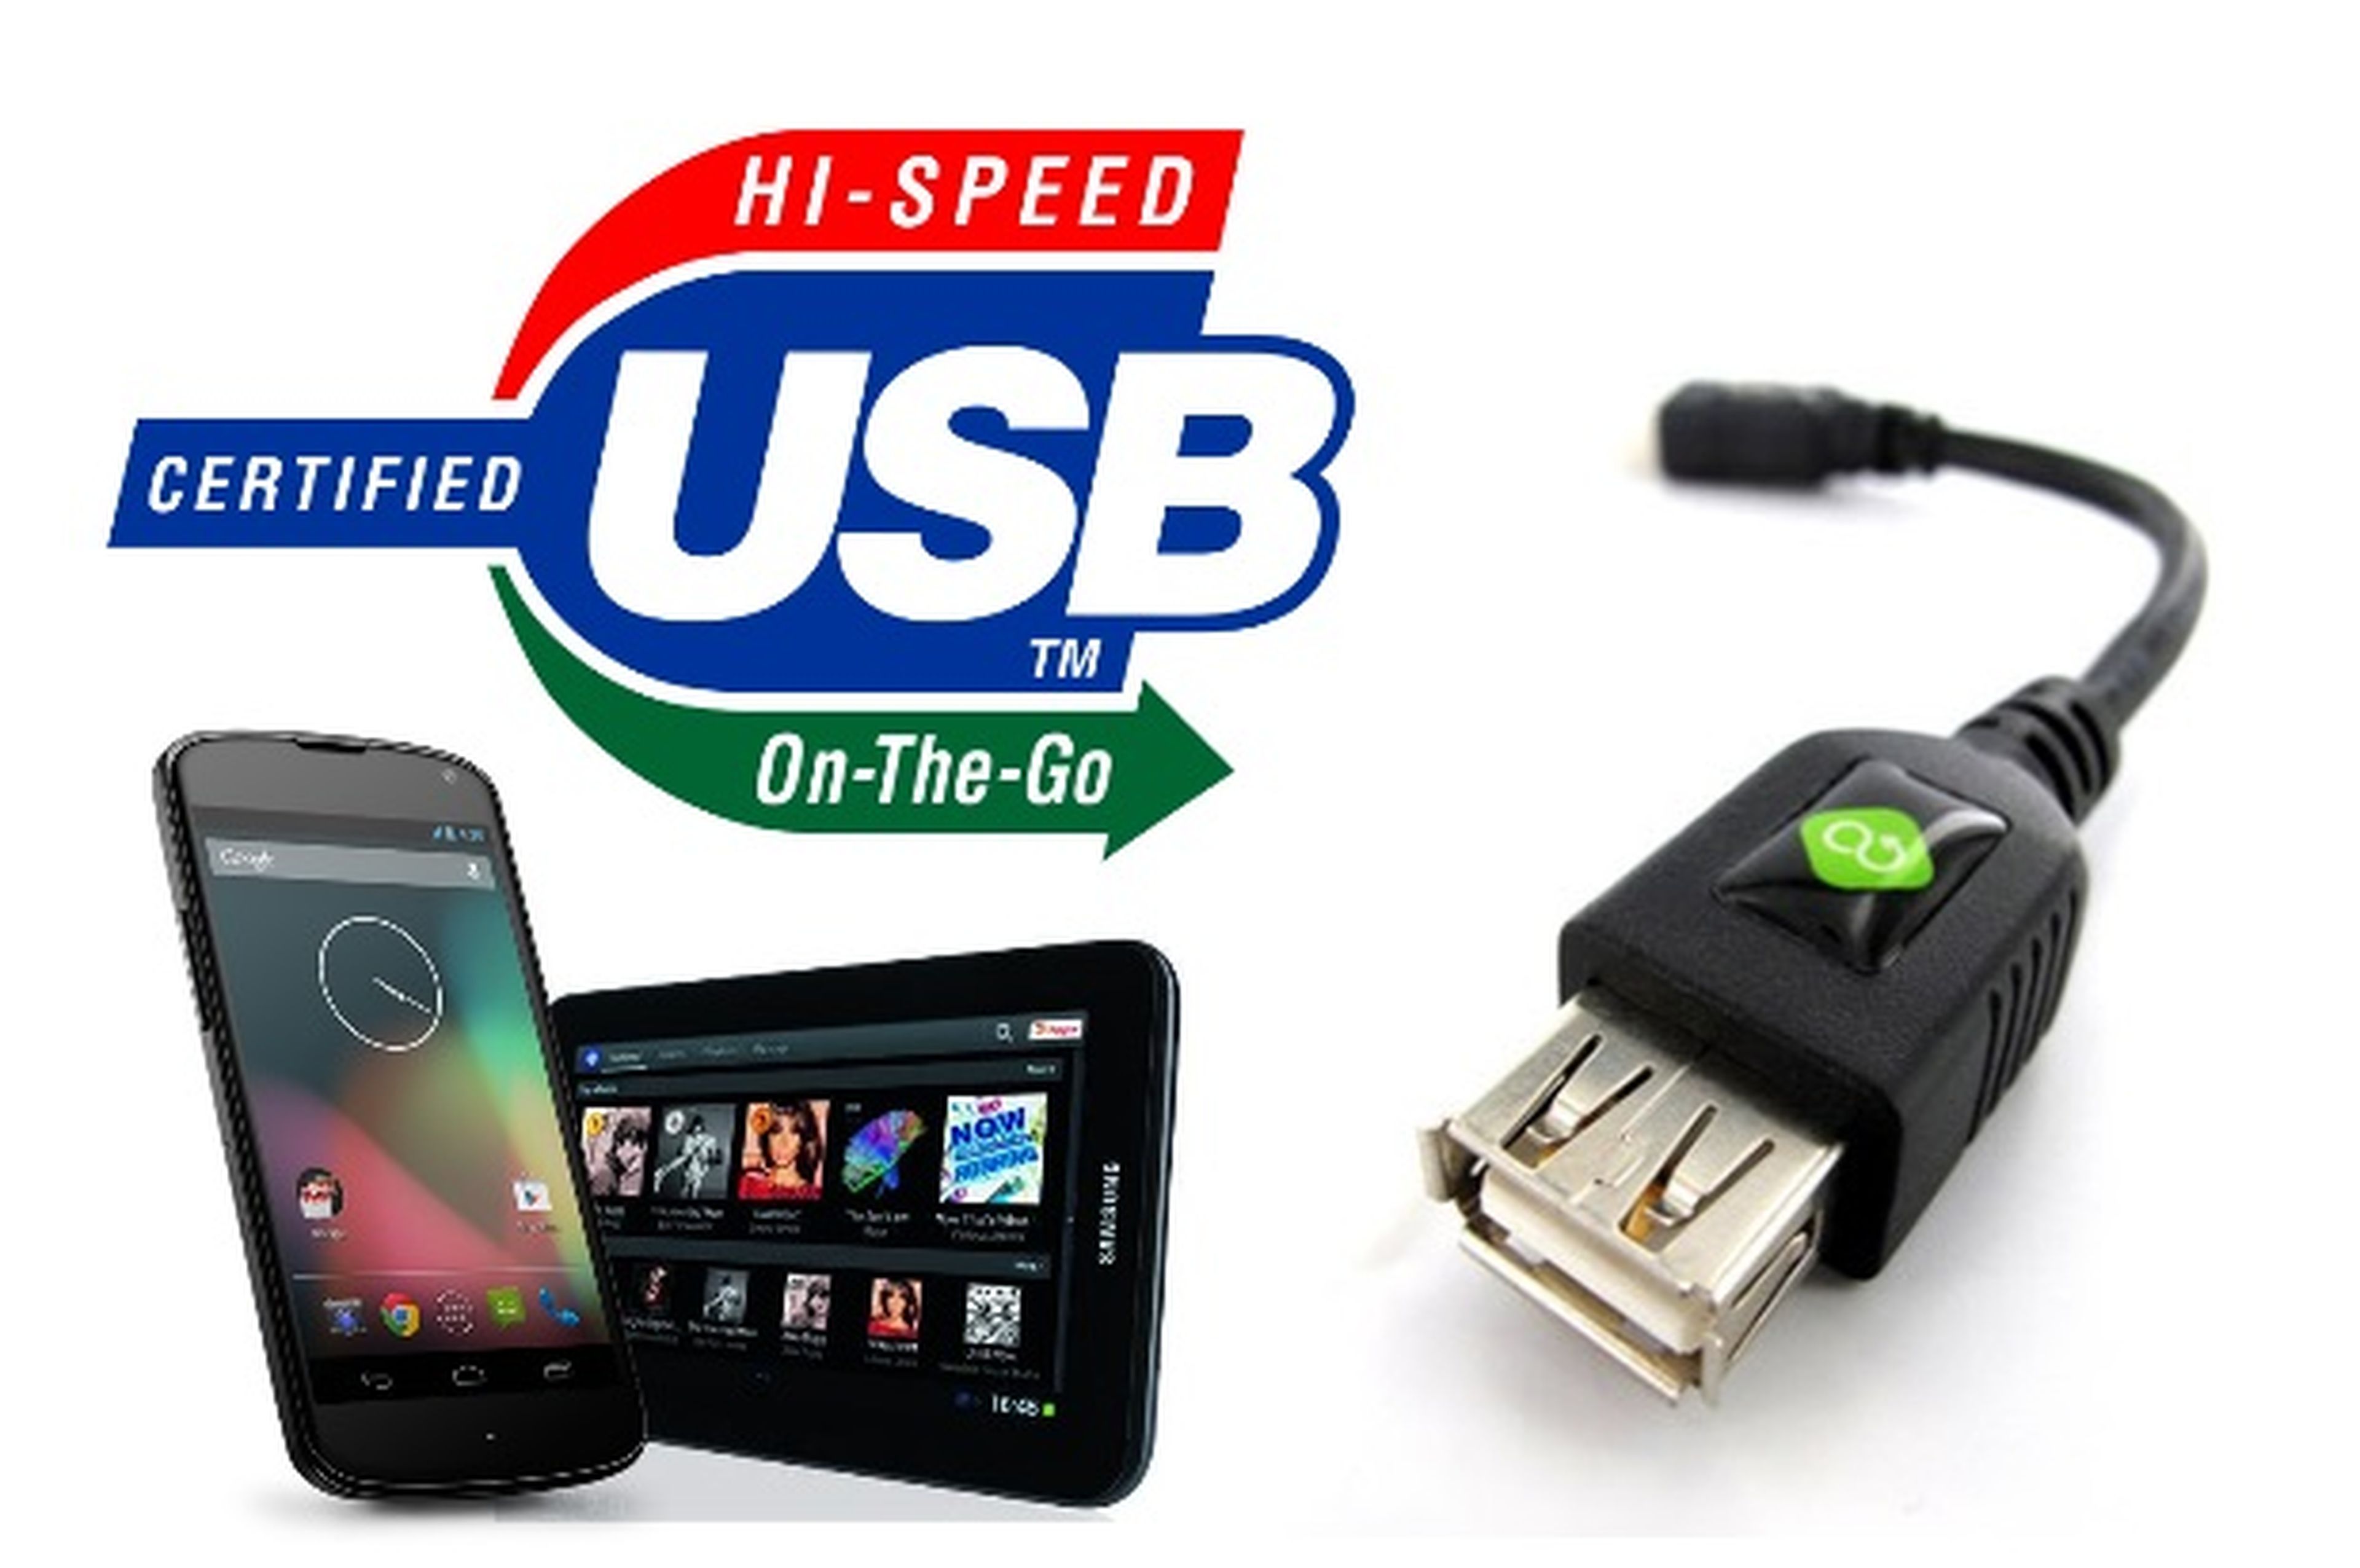 Conecta todo tipo de dispositivos a tu smartphone o tablet mediante un cable USB OTG